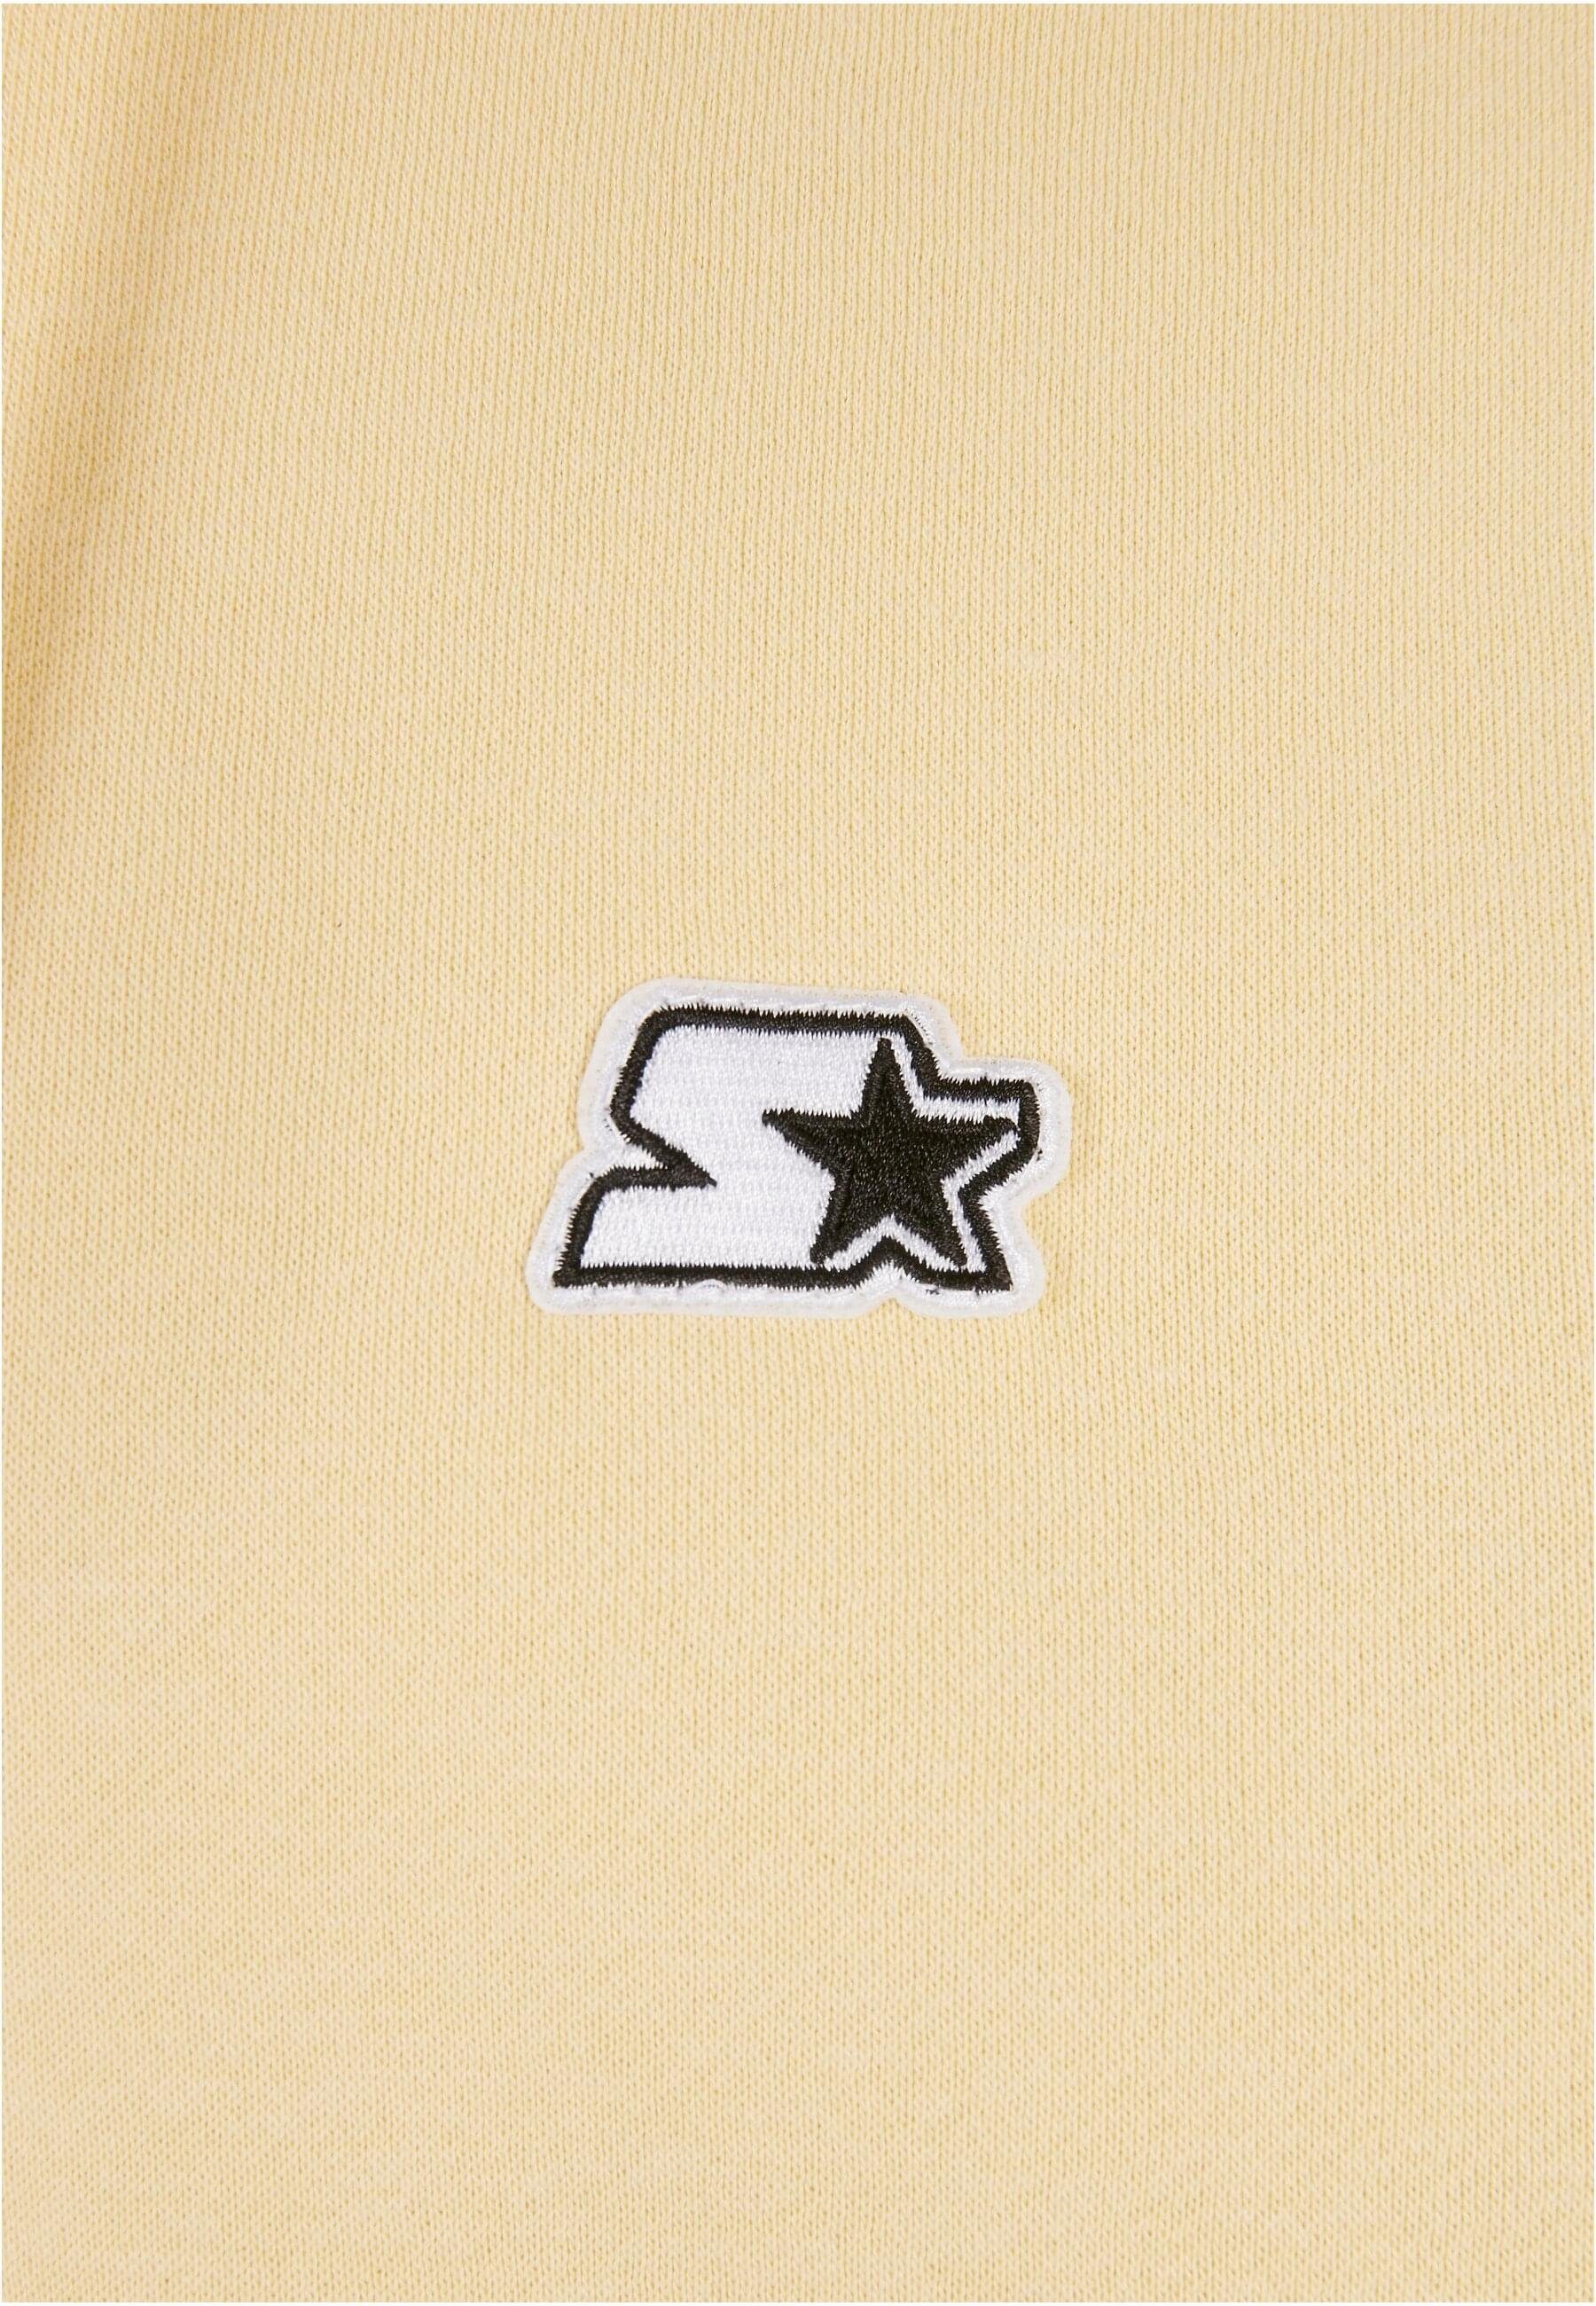 Starter lightyellow (1-tlg) Starter Sweater Label Hoody Essential Starter Black Herren